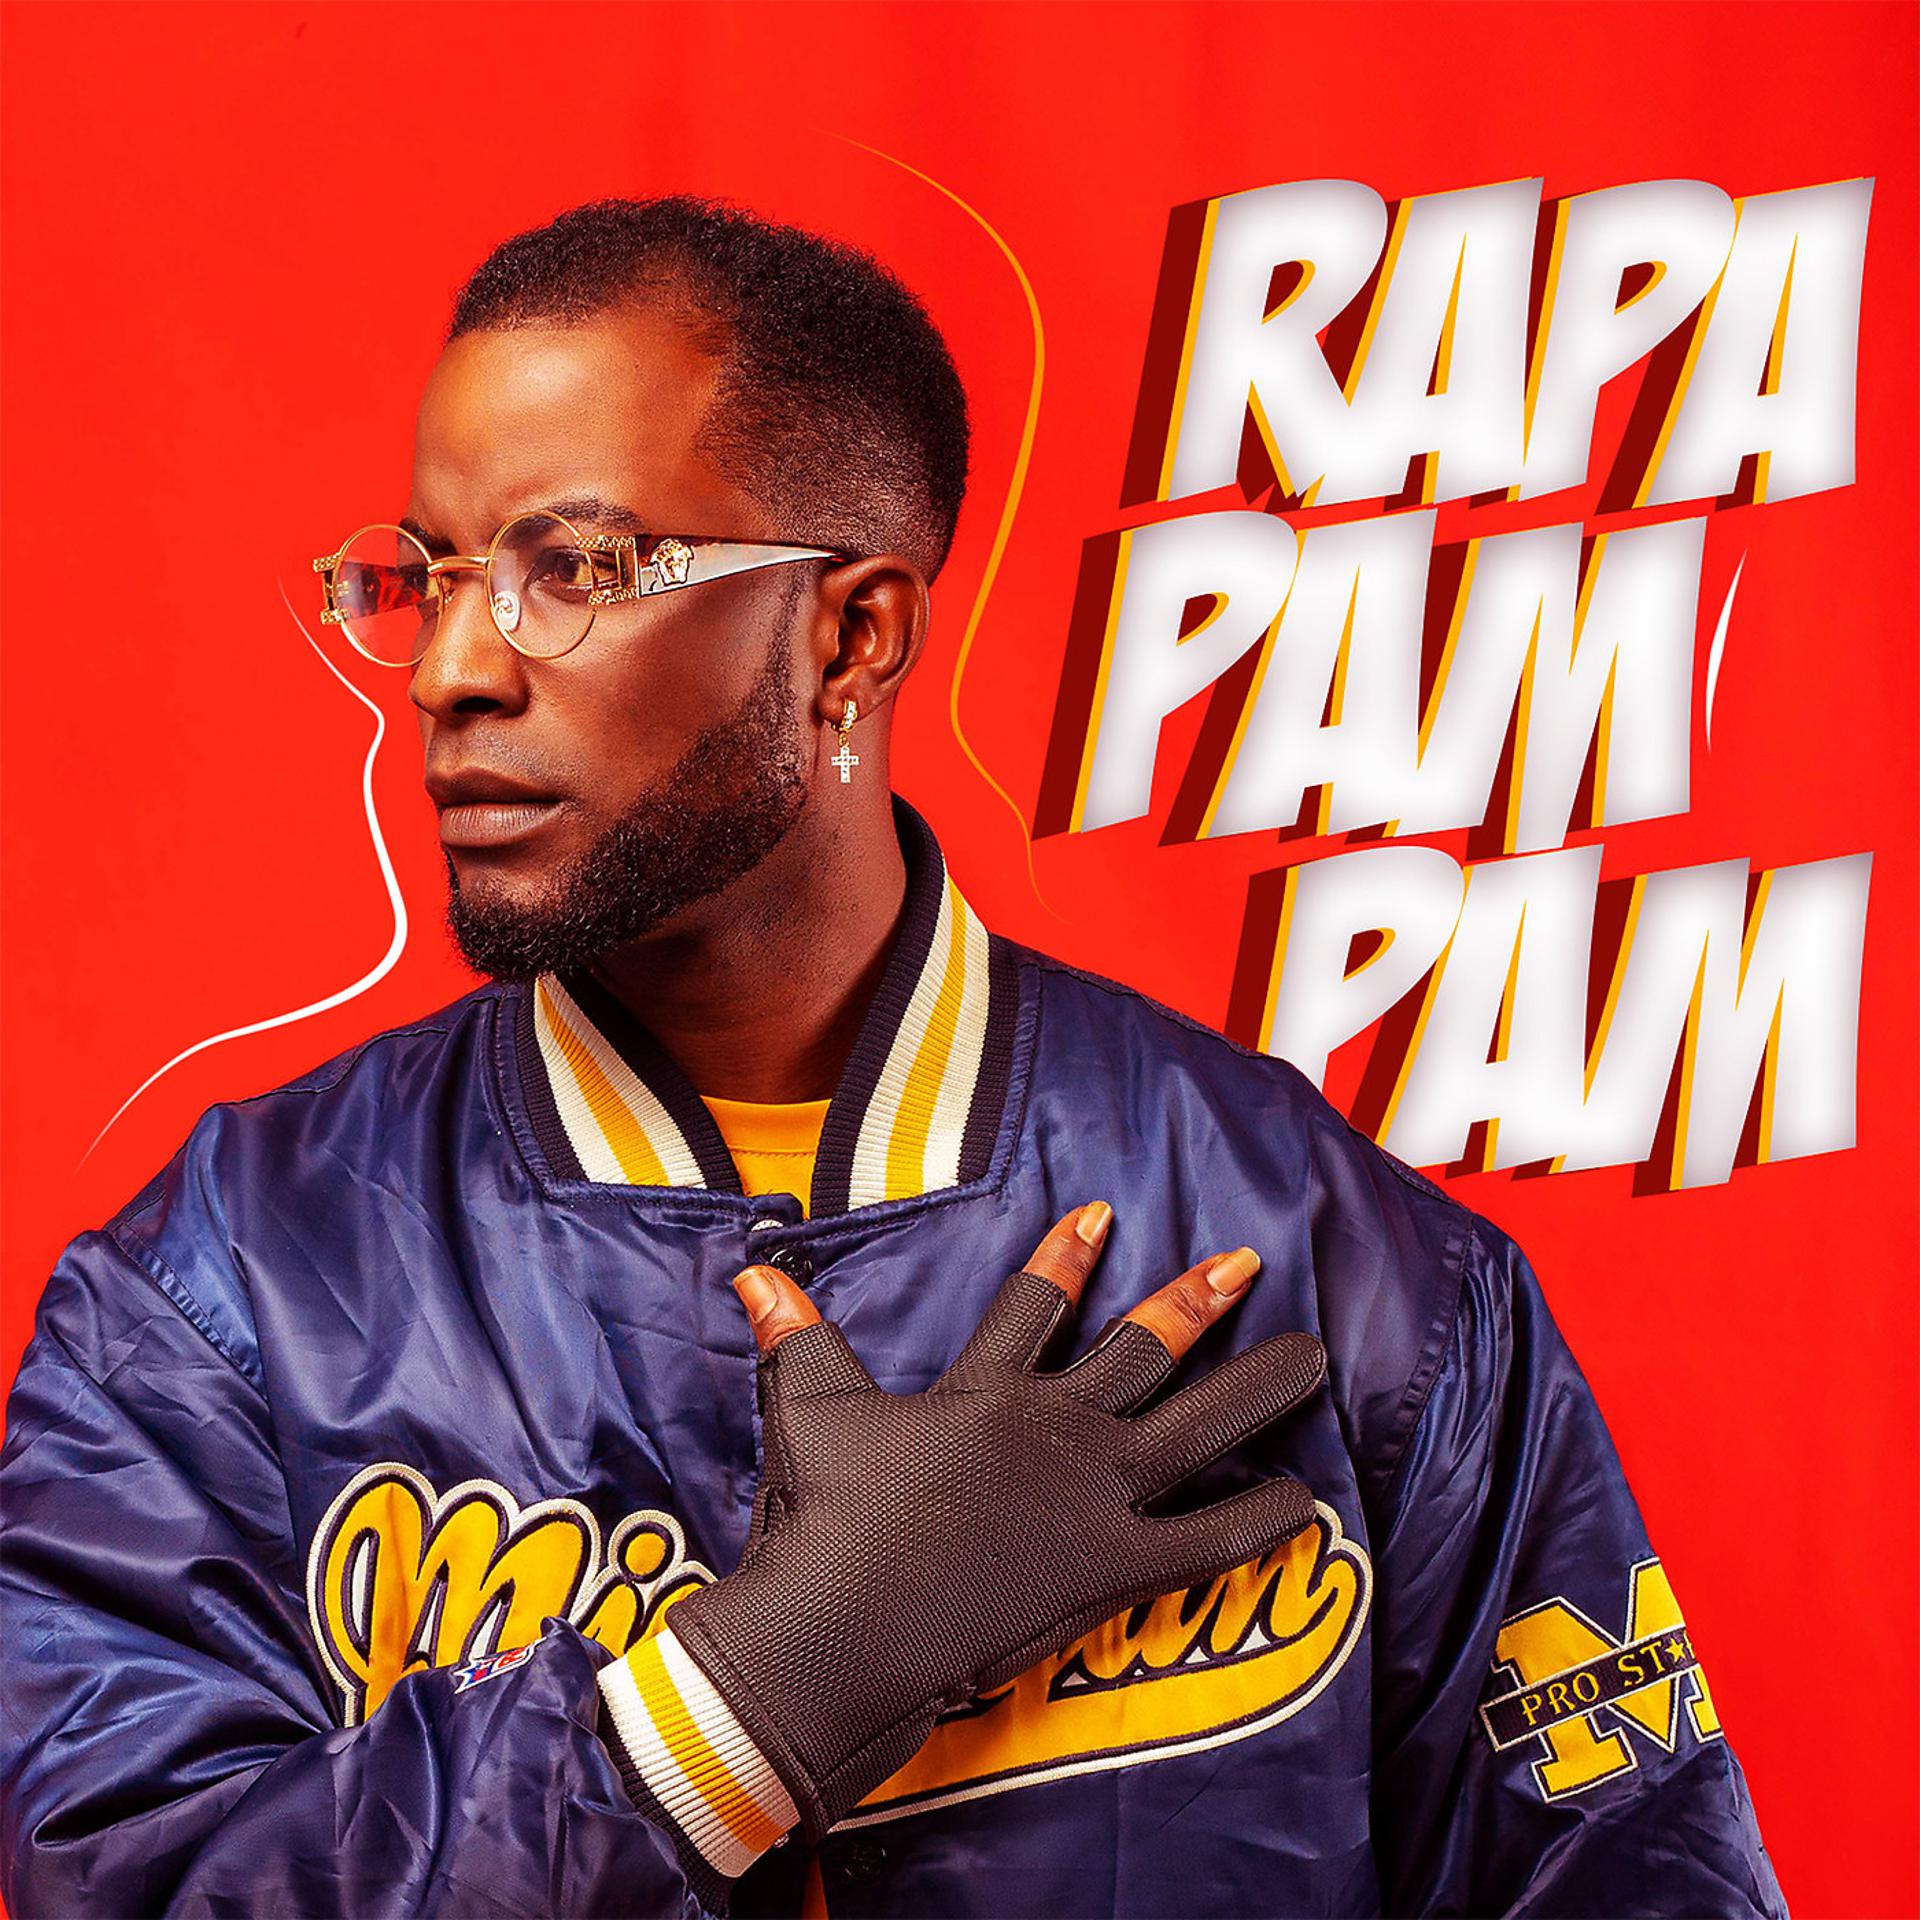 Постер альбома Rapa Pam Pam